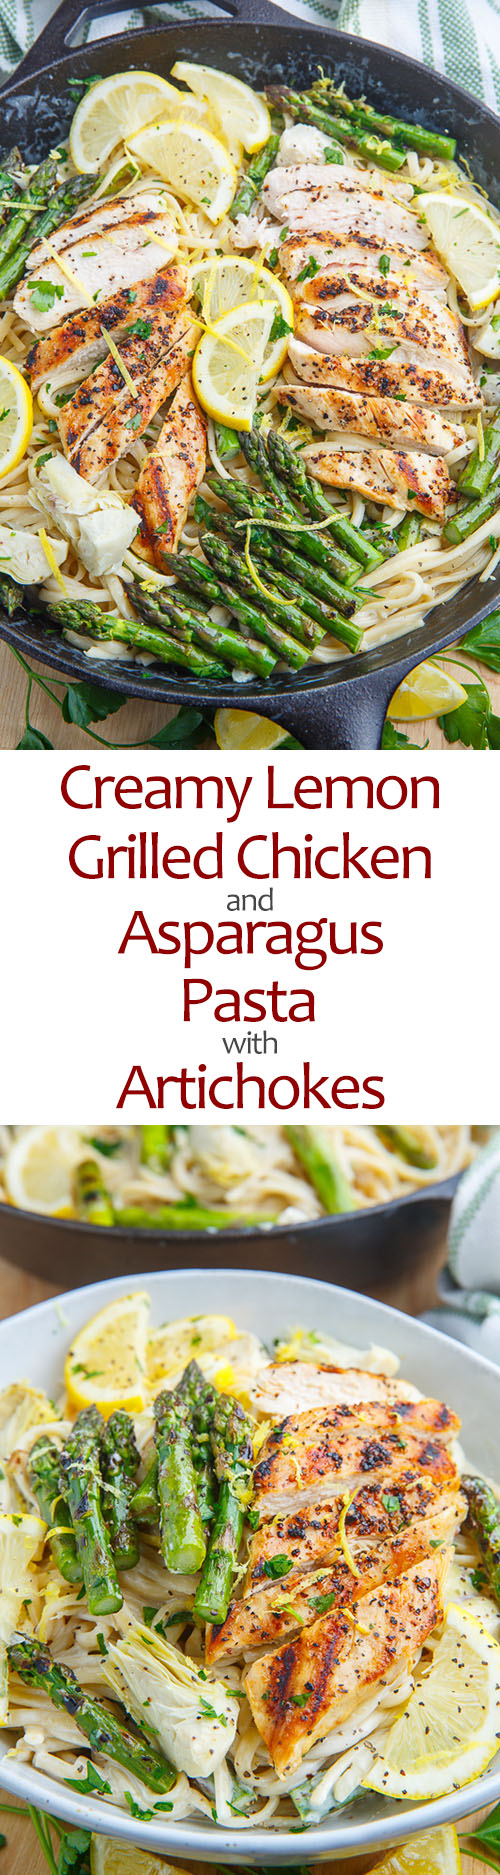 Creamy Lemon Grilled Chicken, Asparagus and Artichoke Pasta